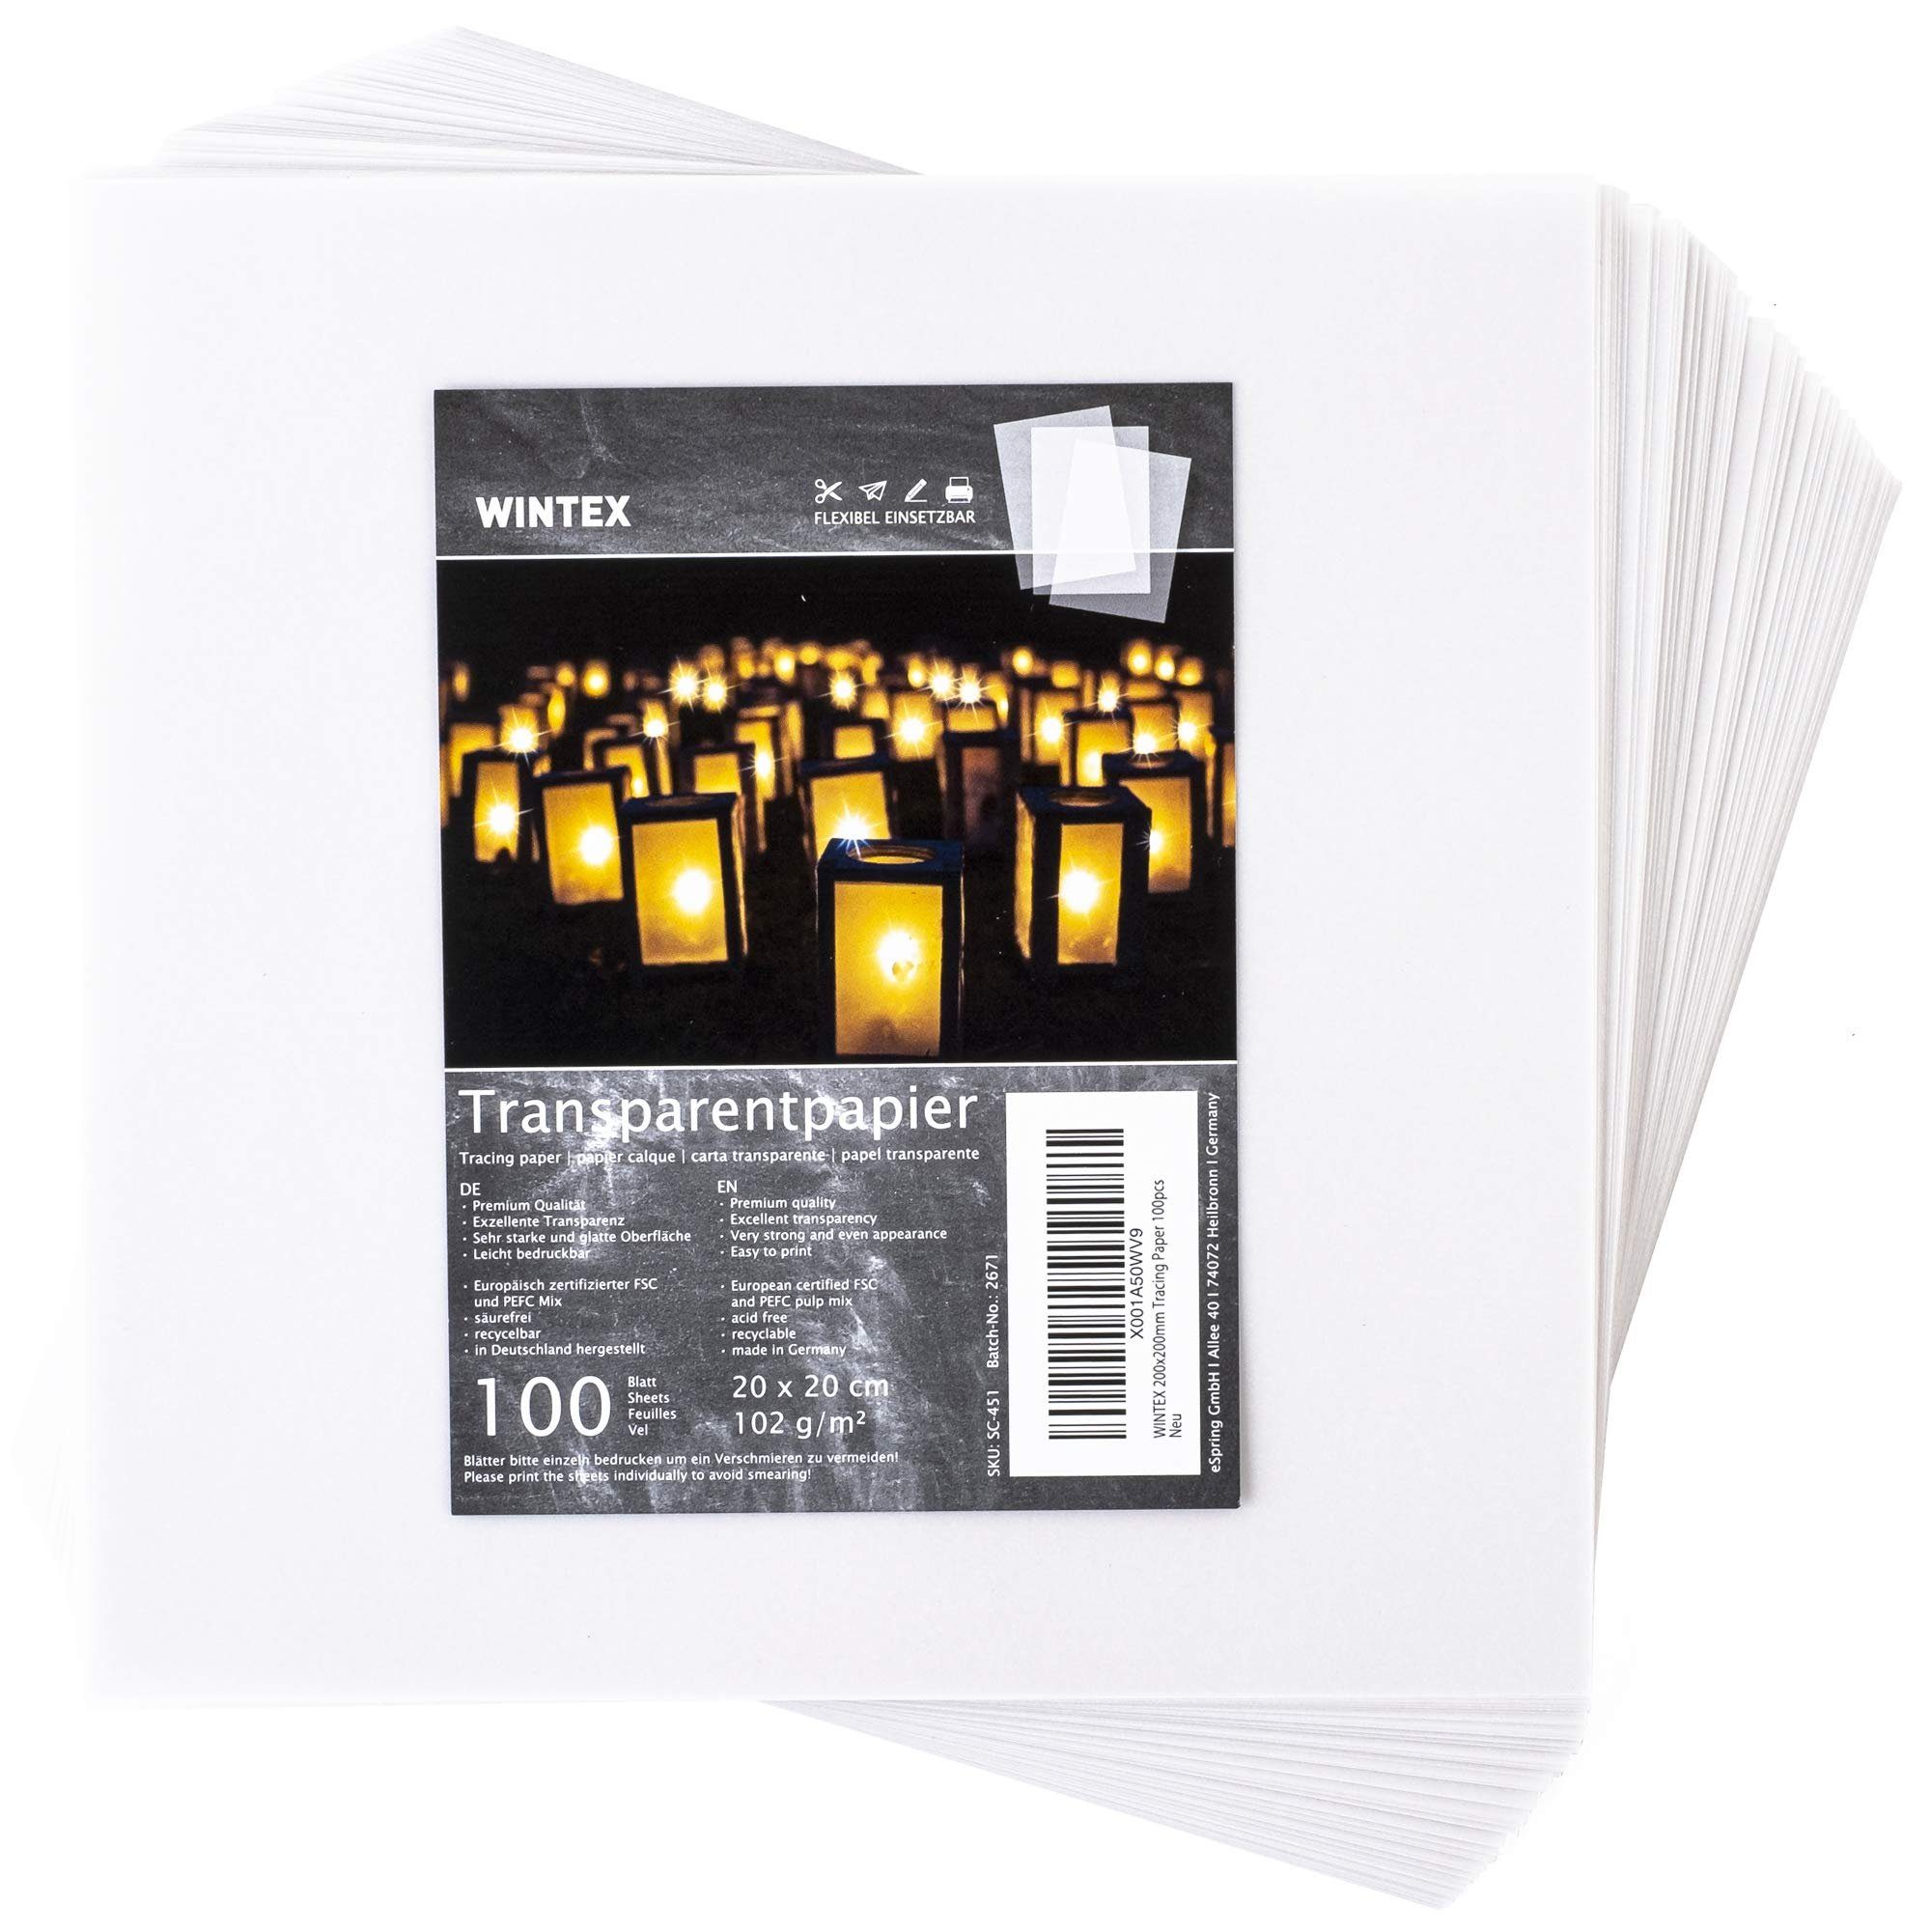 WINTEX Transparentpapier Transparentes Papier, 20x20 cm, 100 Blatt, Transparentes Bastelpapier 20x20 cm, 100 Blatt, weiß & bedruckbar